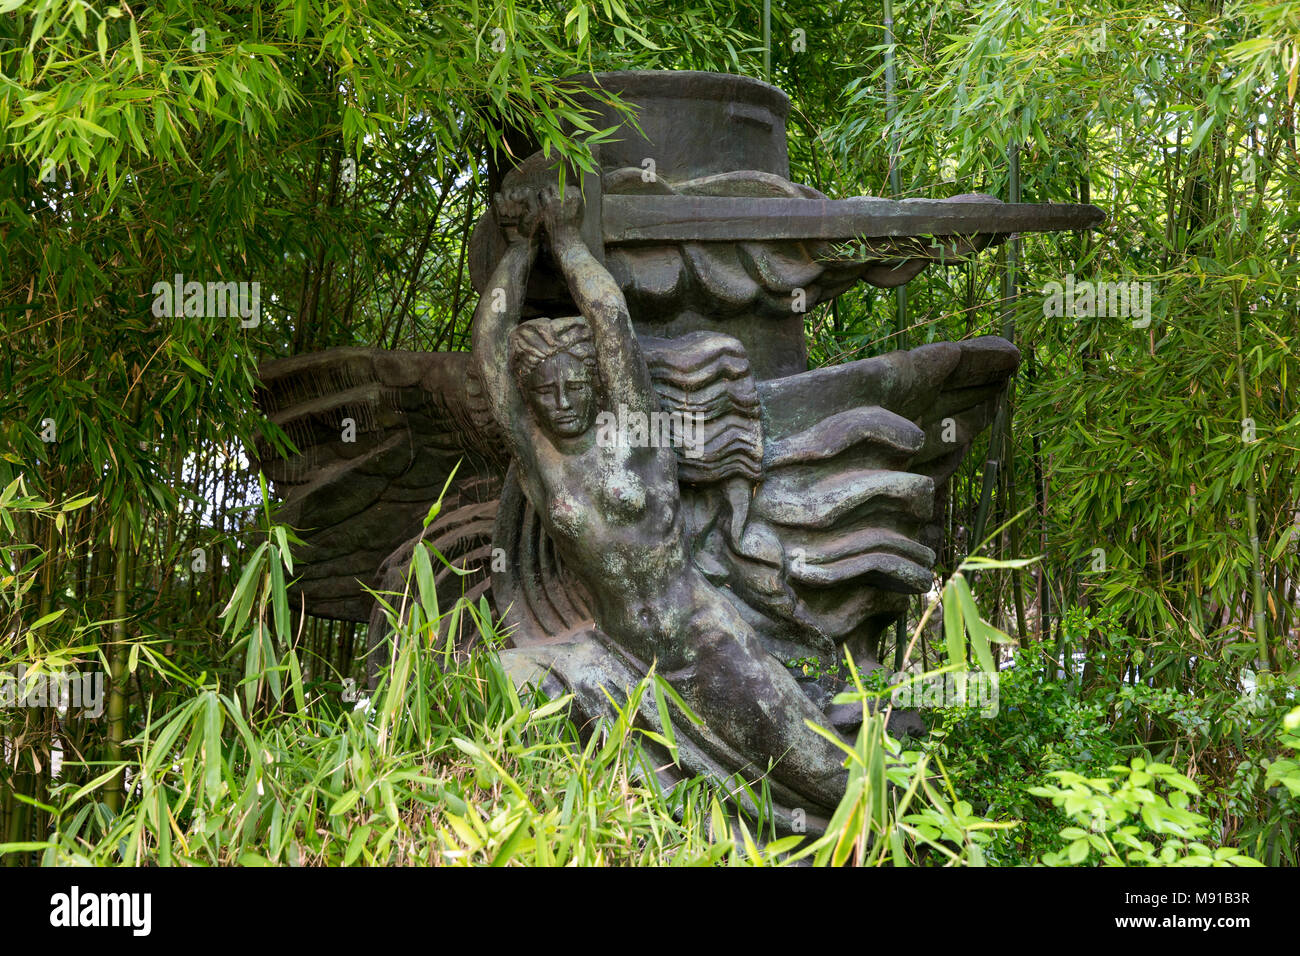 Maurice Denis museum, Saint Germain en Laye, France. Antoine Bourdelle statue. Stock Photo